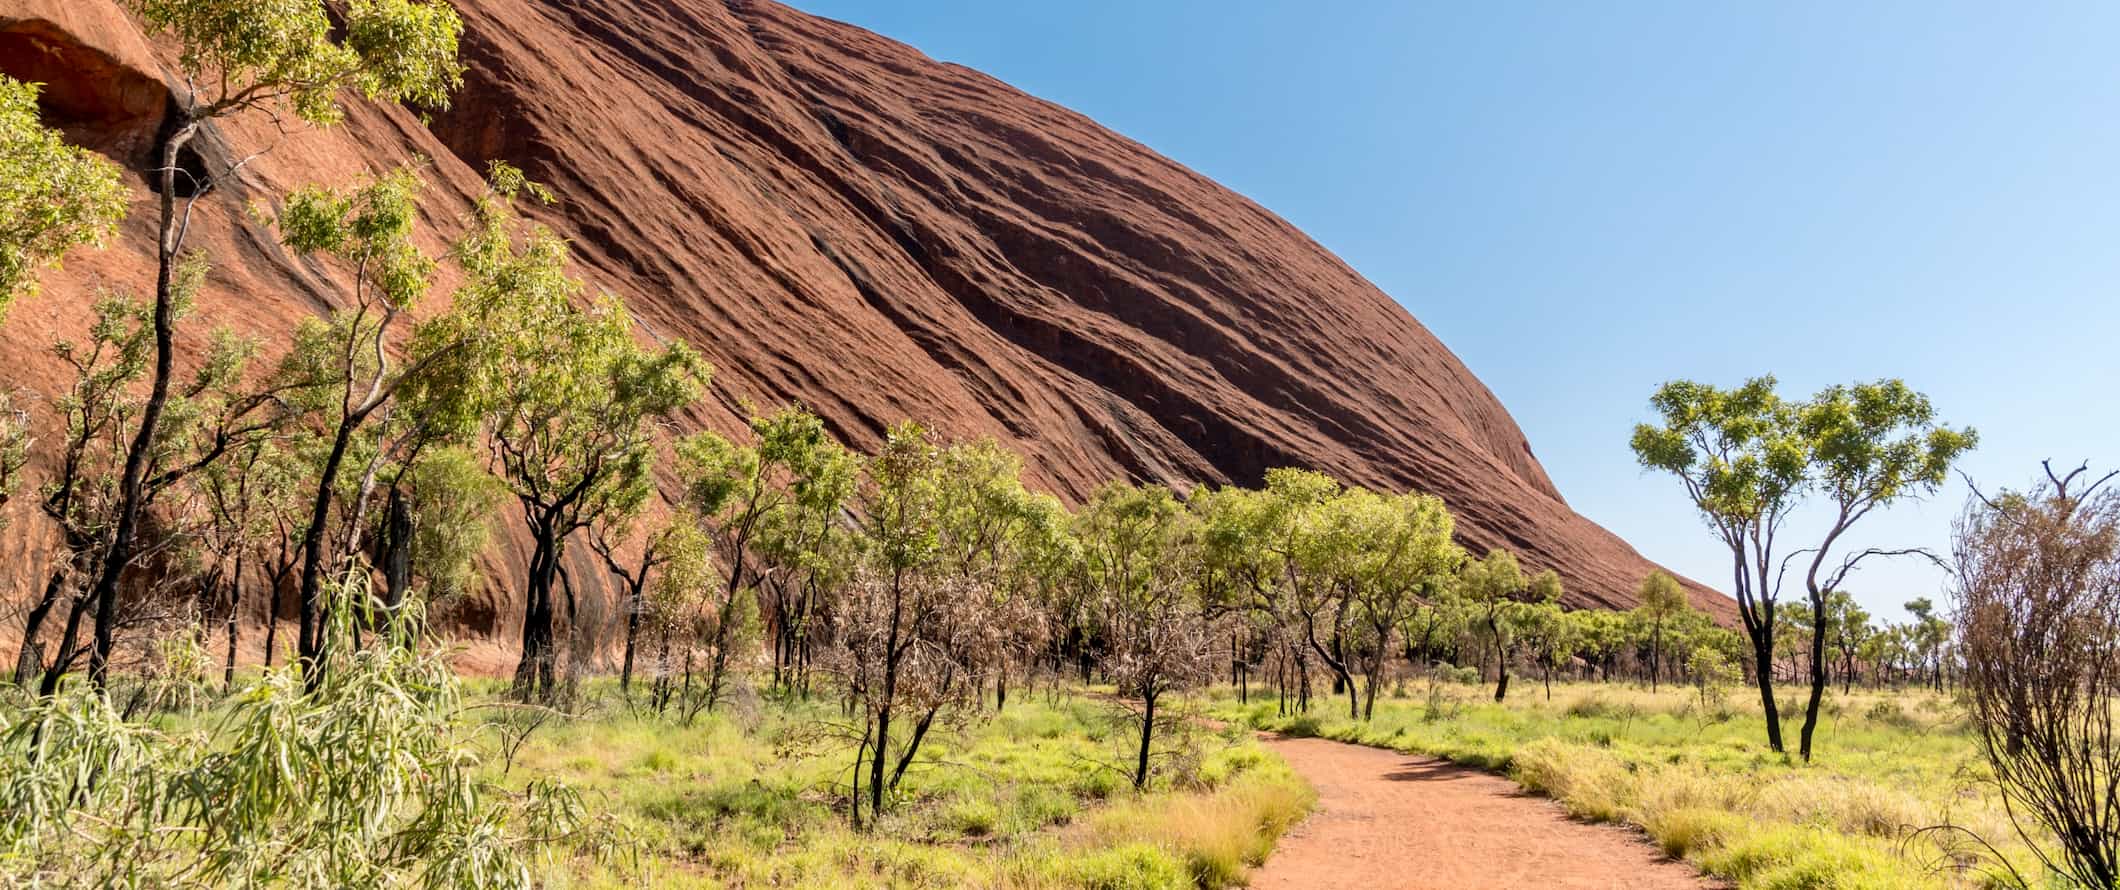 A path leading up to the famous Uluru rock near Alice Springs, Australia